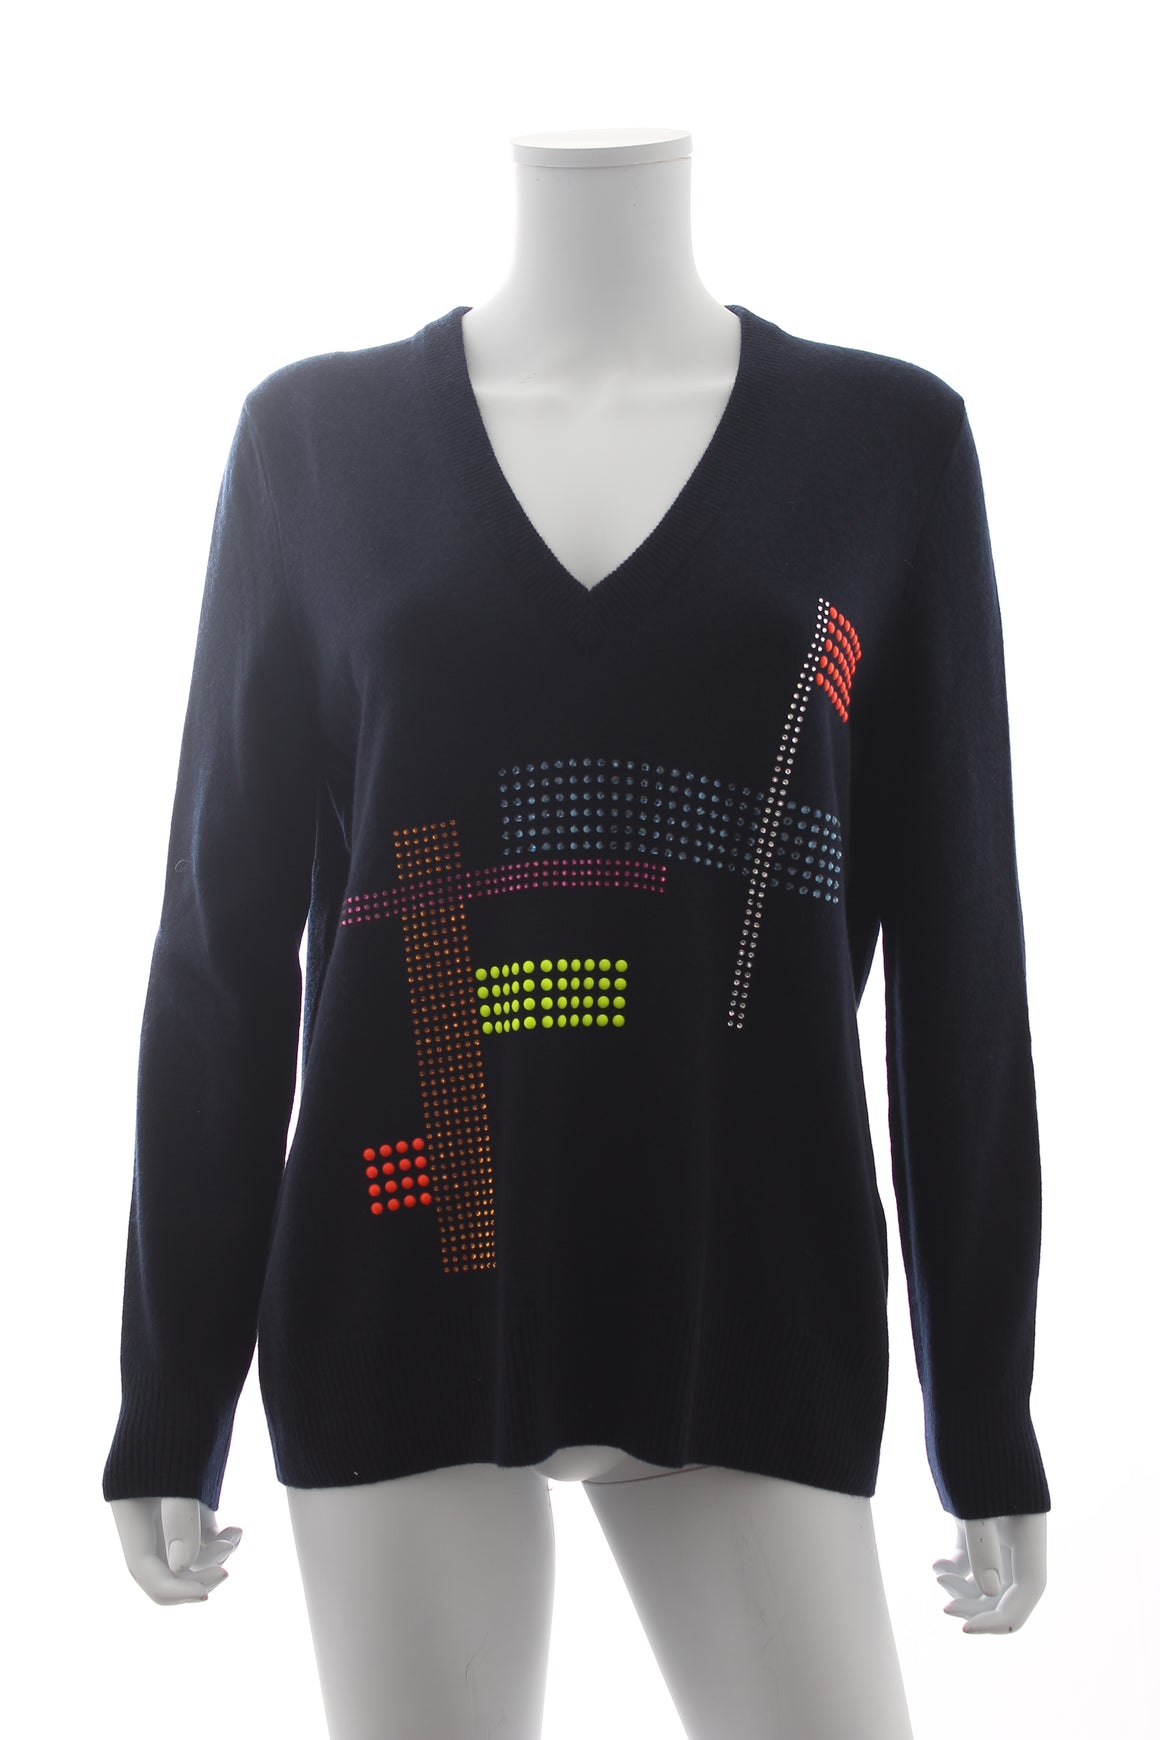 Christopher Kane Crystal Embellished Wool and Cashmere-Blend Sweater